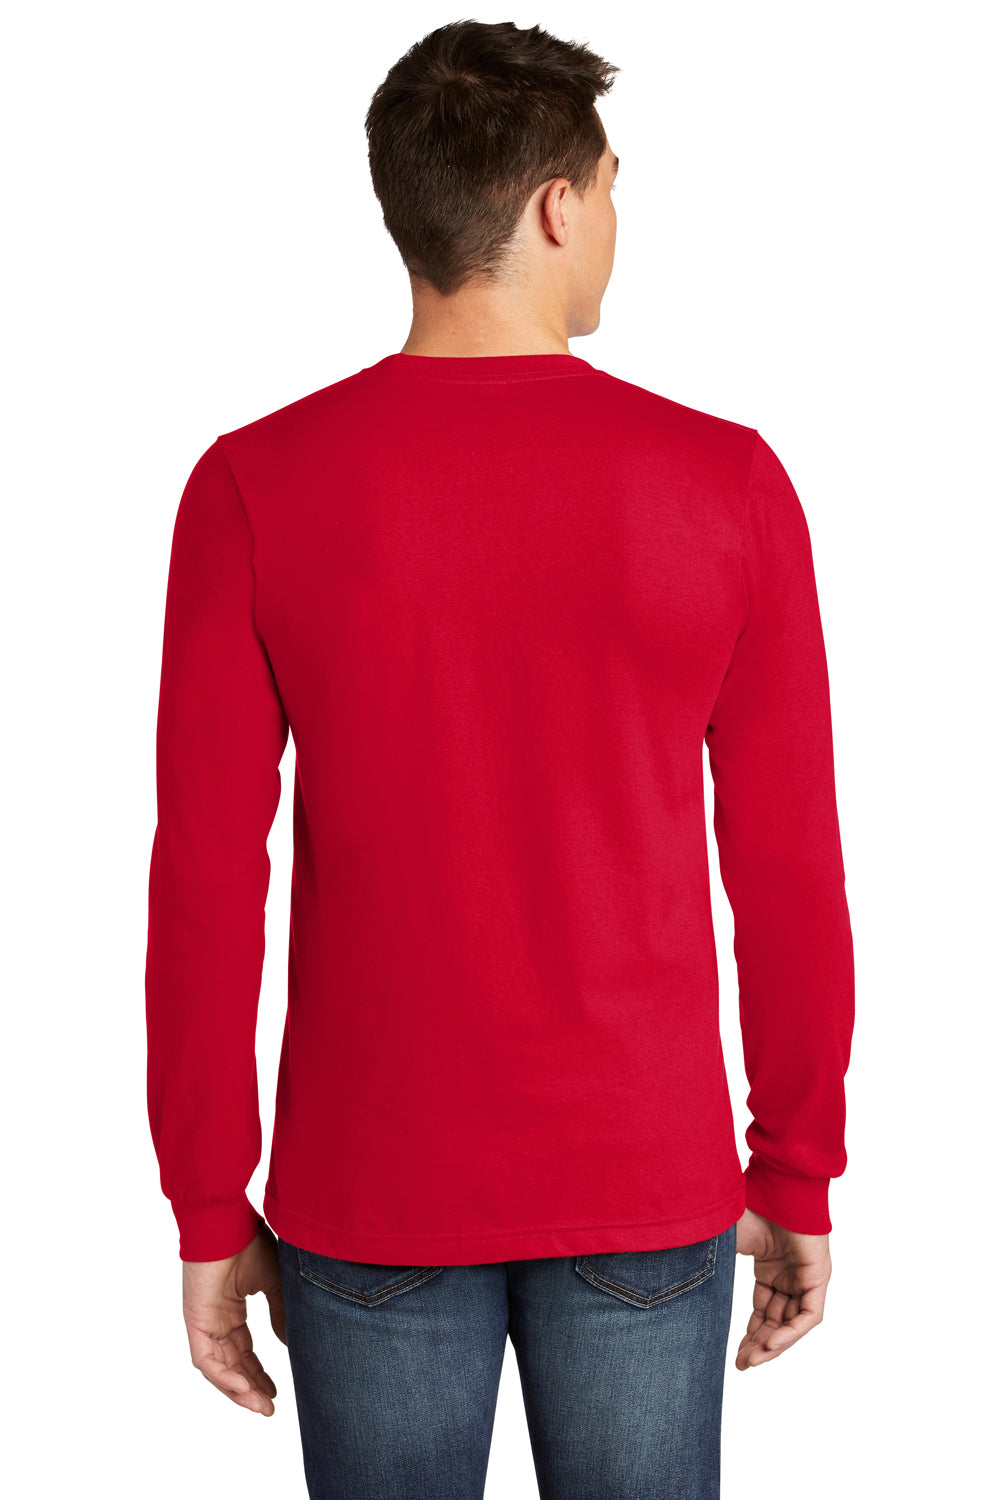 American Apparel 2007 Mens Fine Jersey Long Sleeve Crewneck T-Shirt Red Model Back